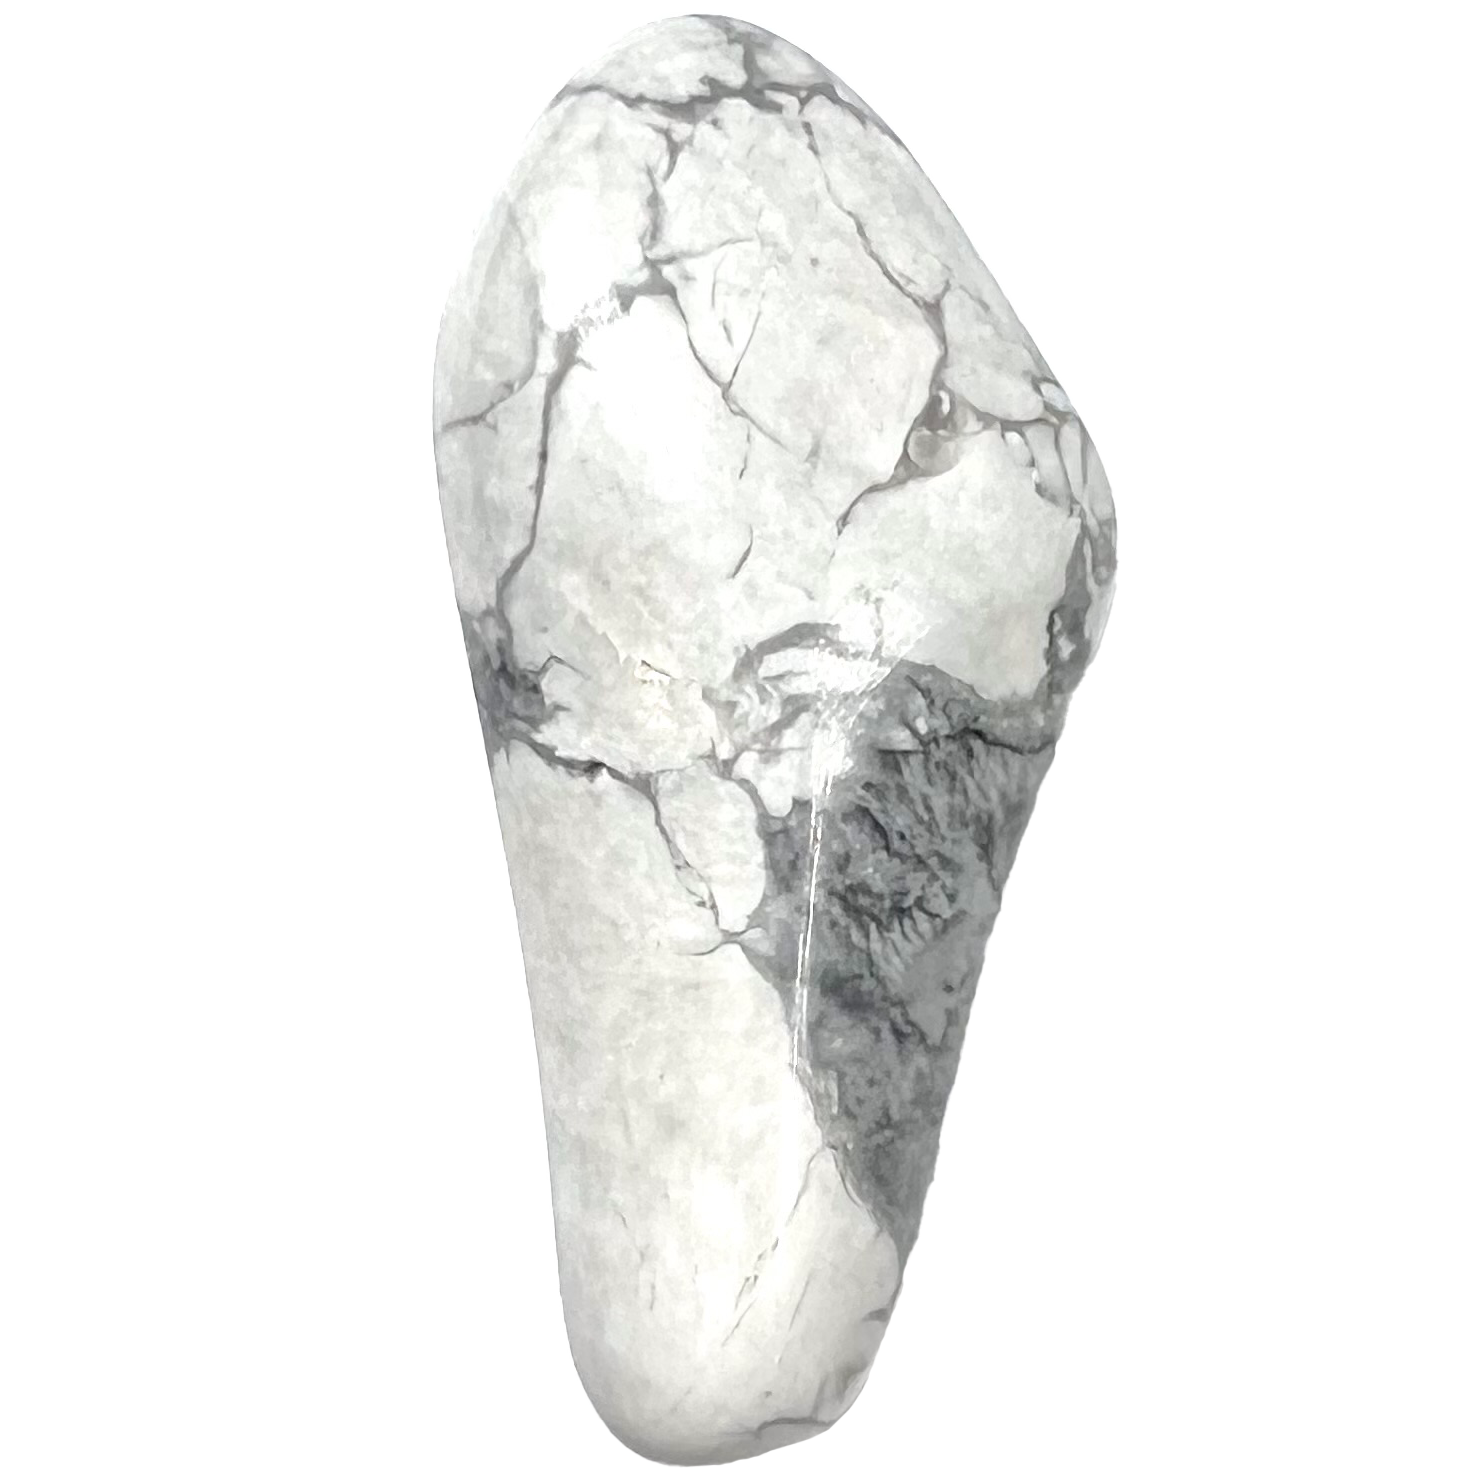 A tumbled magnesite stone.  The stone is white with gray spiderweb matrix.